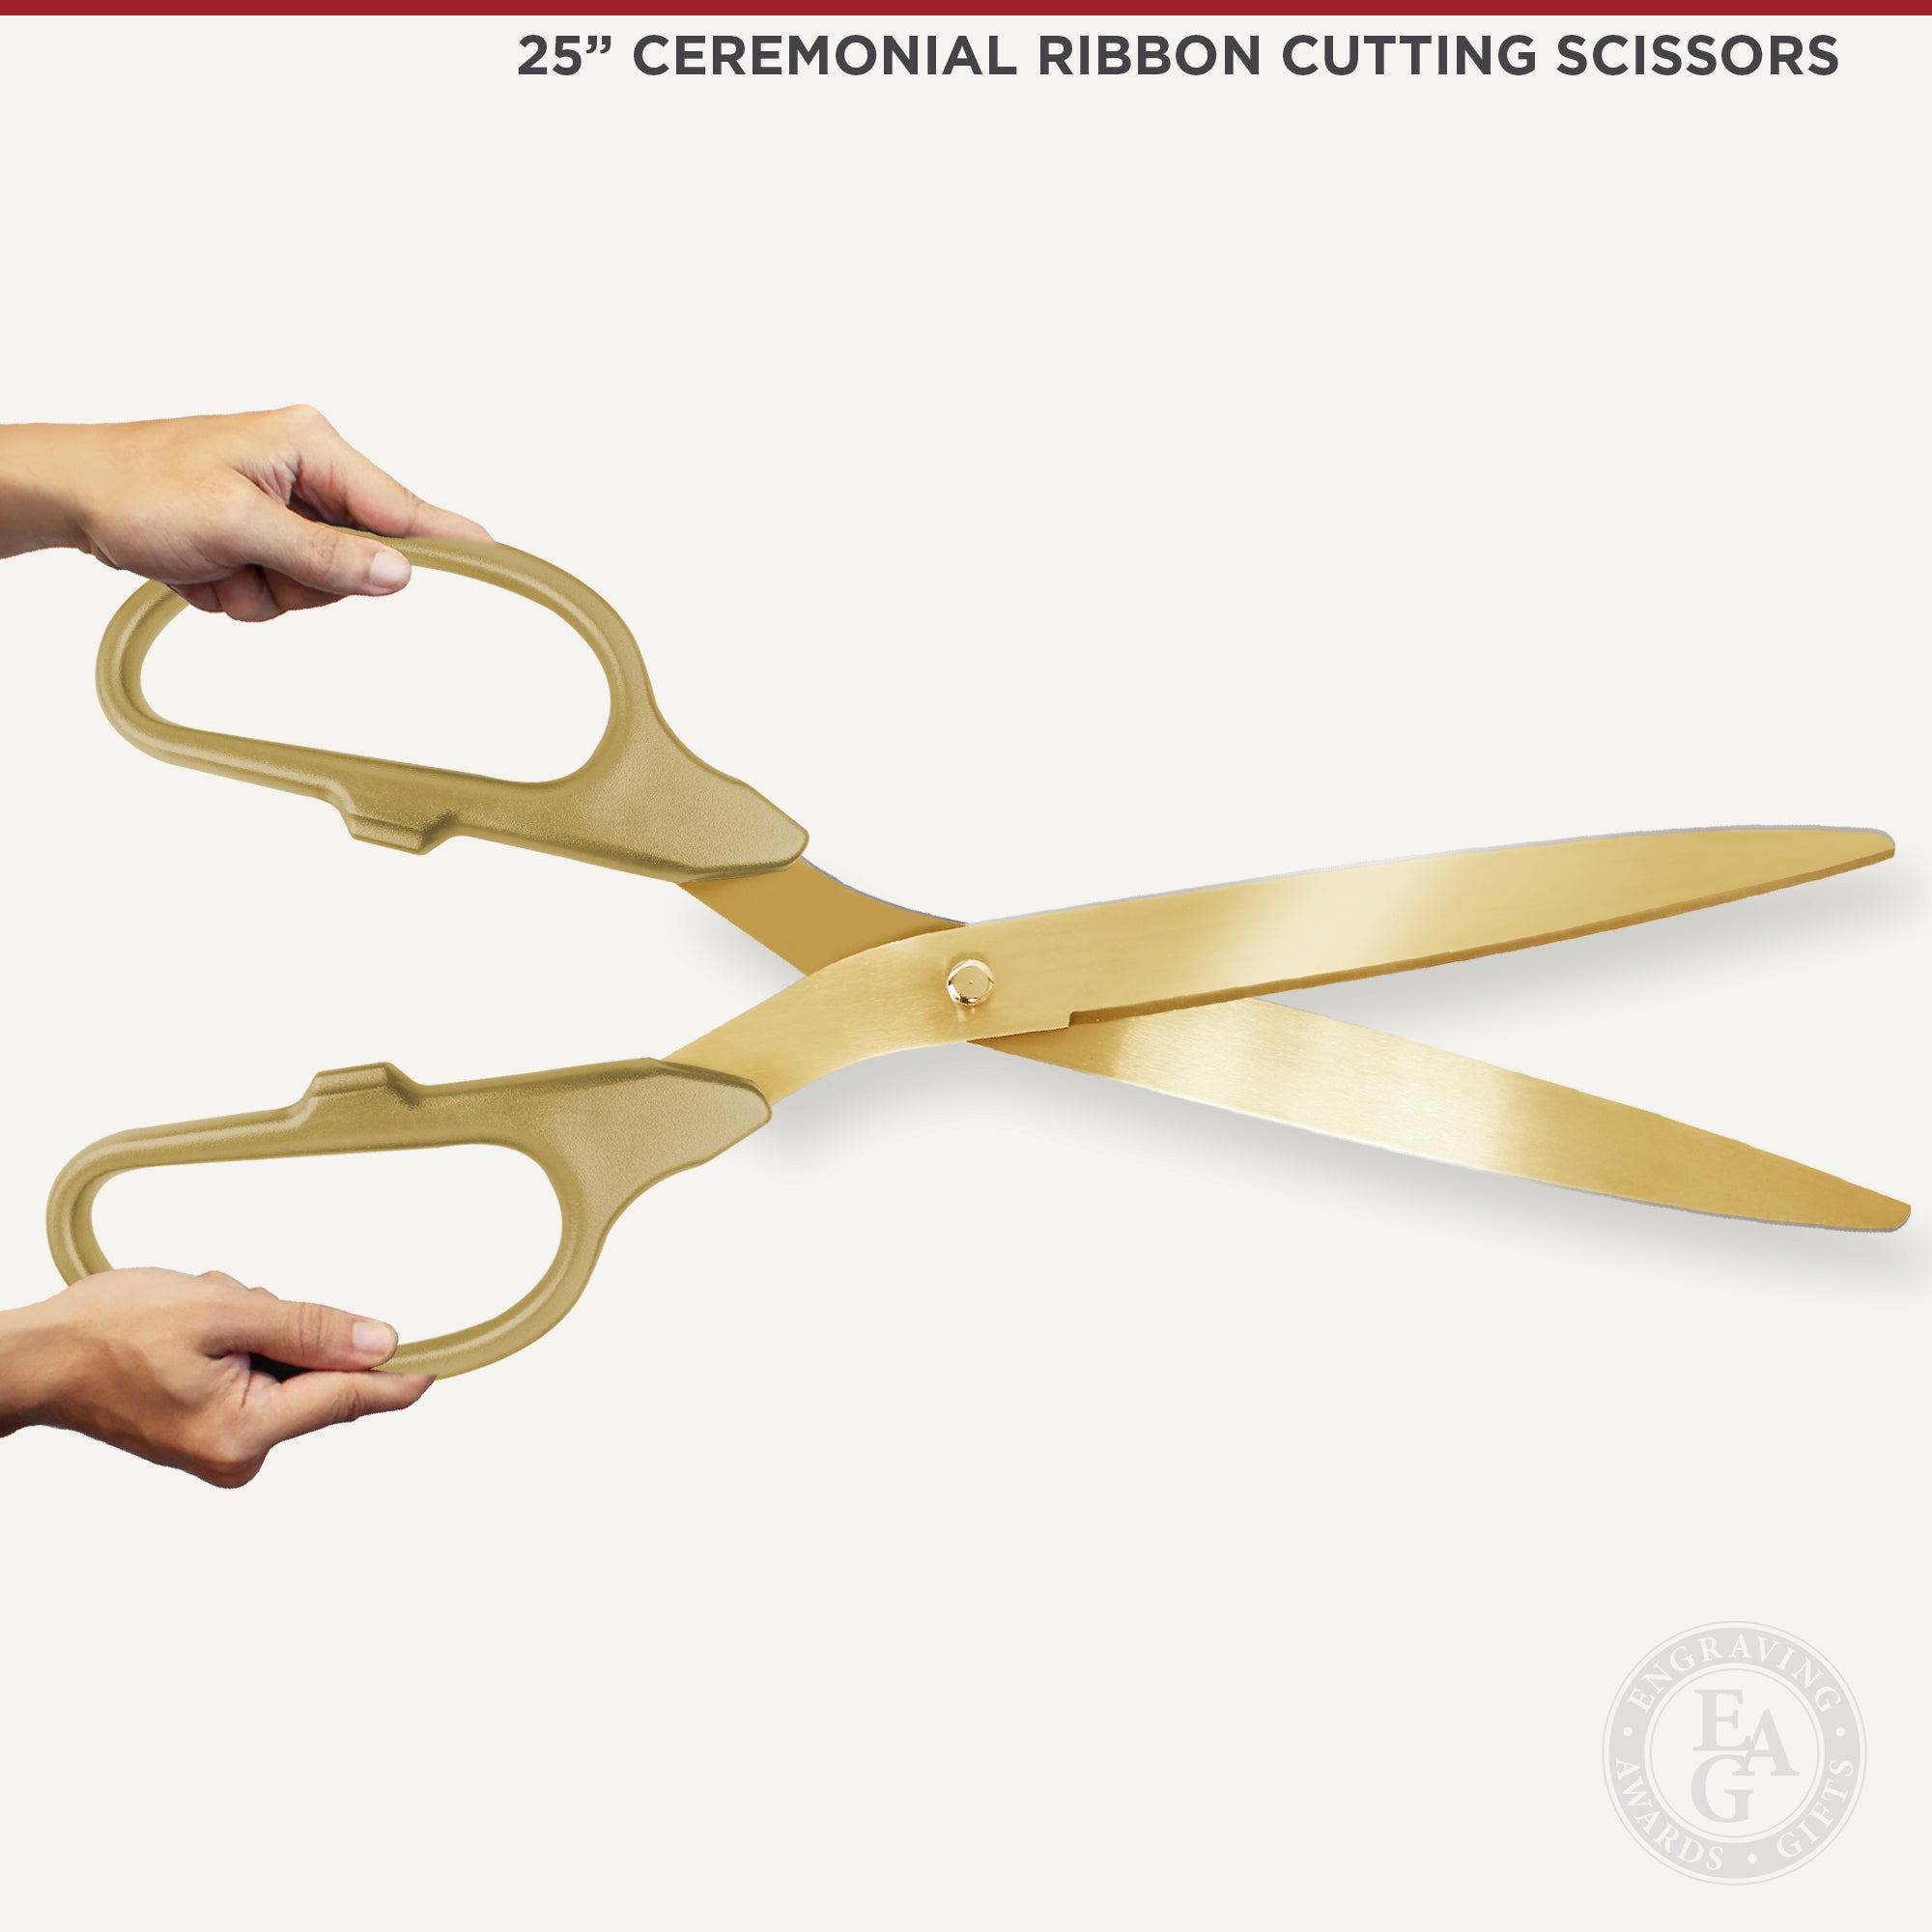 Small Ceremonial Bows for Scissors